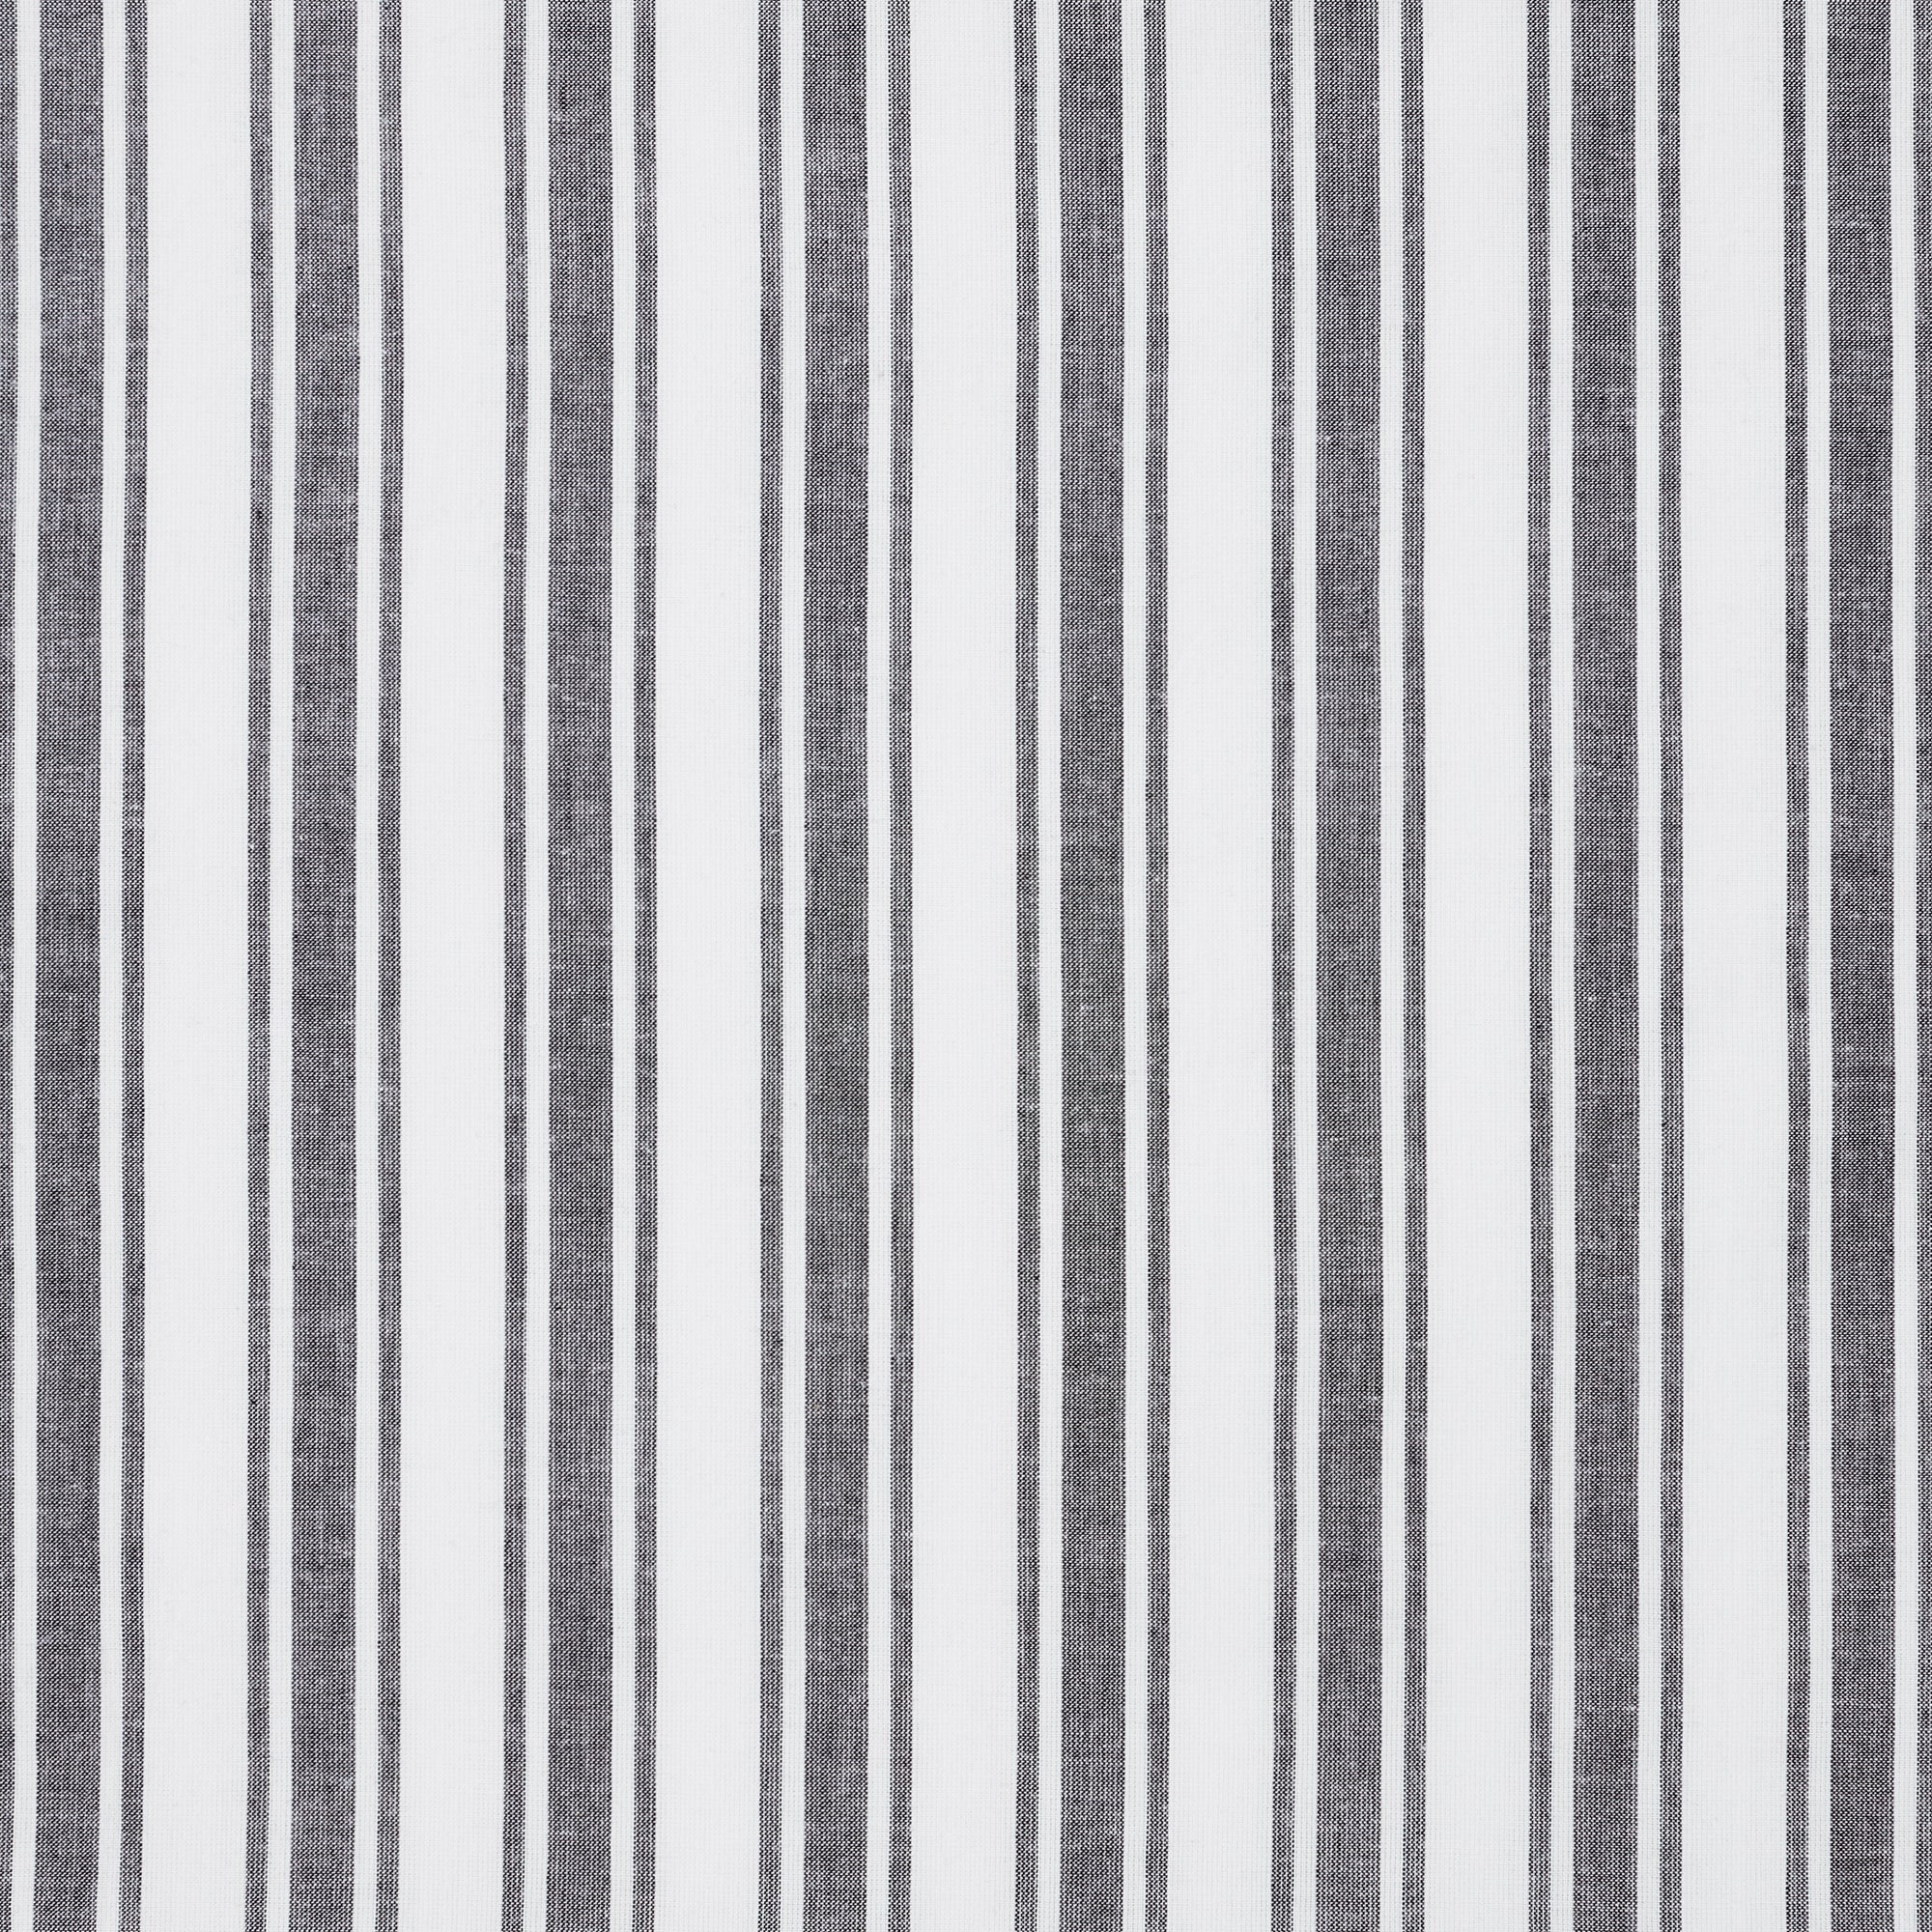 Sawyer Mill Black Ticking Stripe Valance Curtain 16x60 VHC Brands